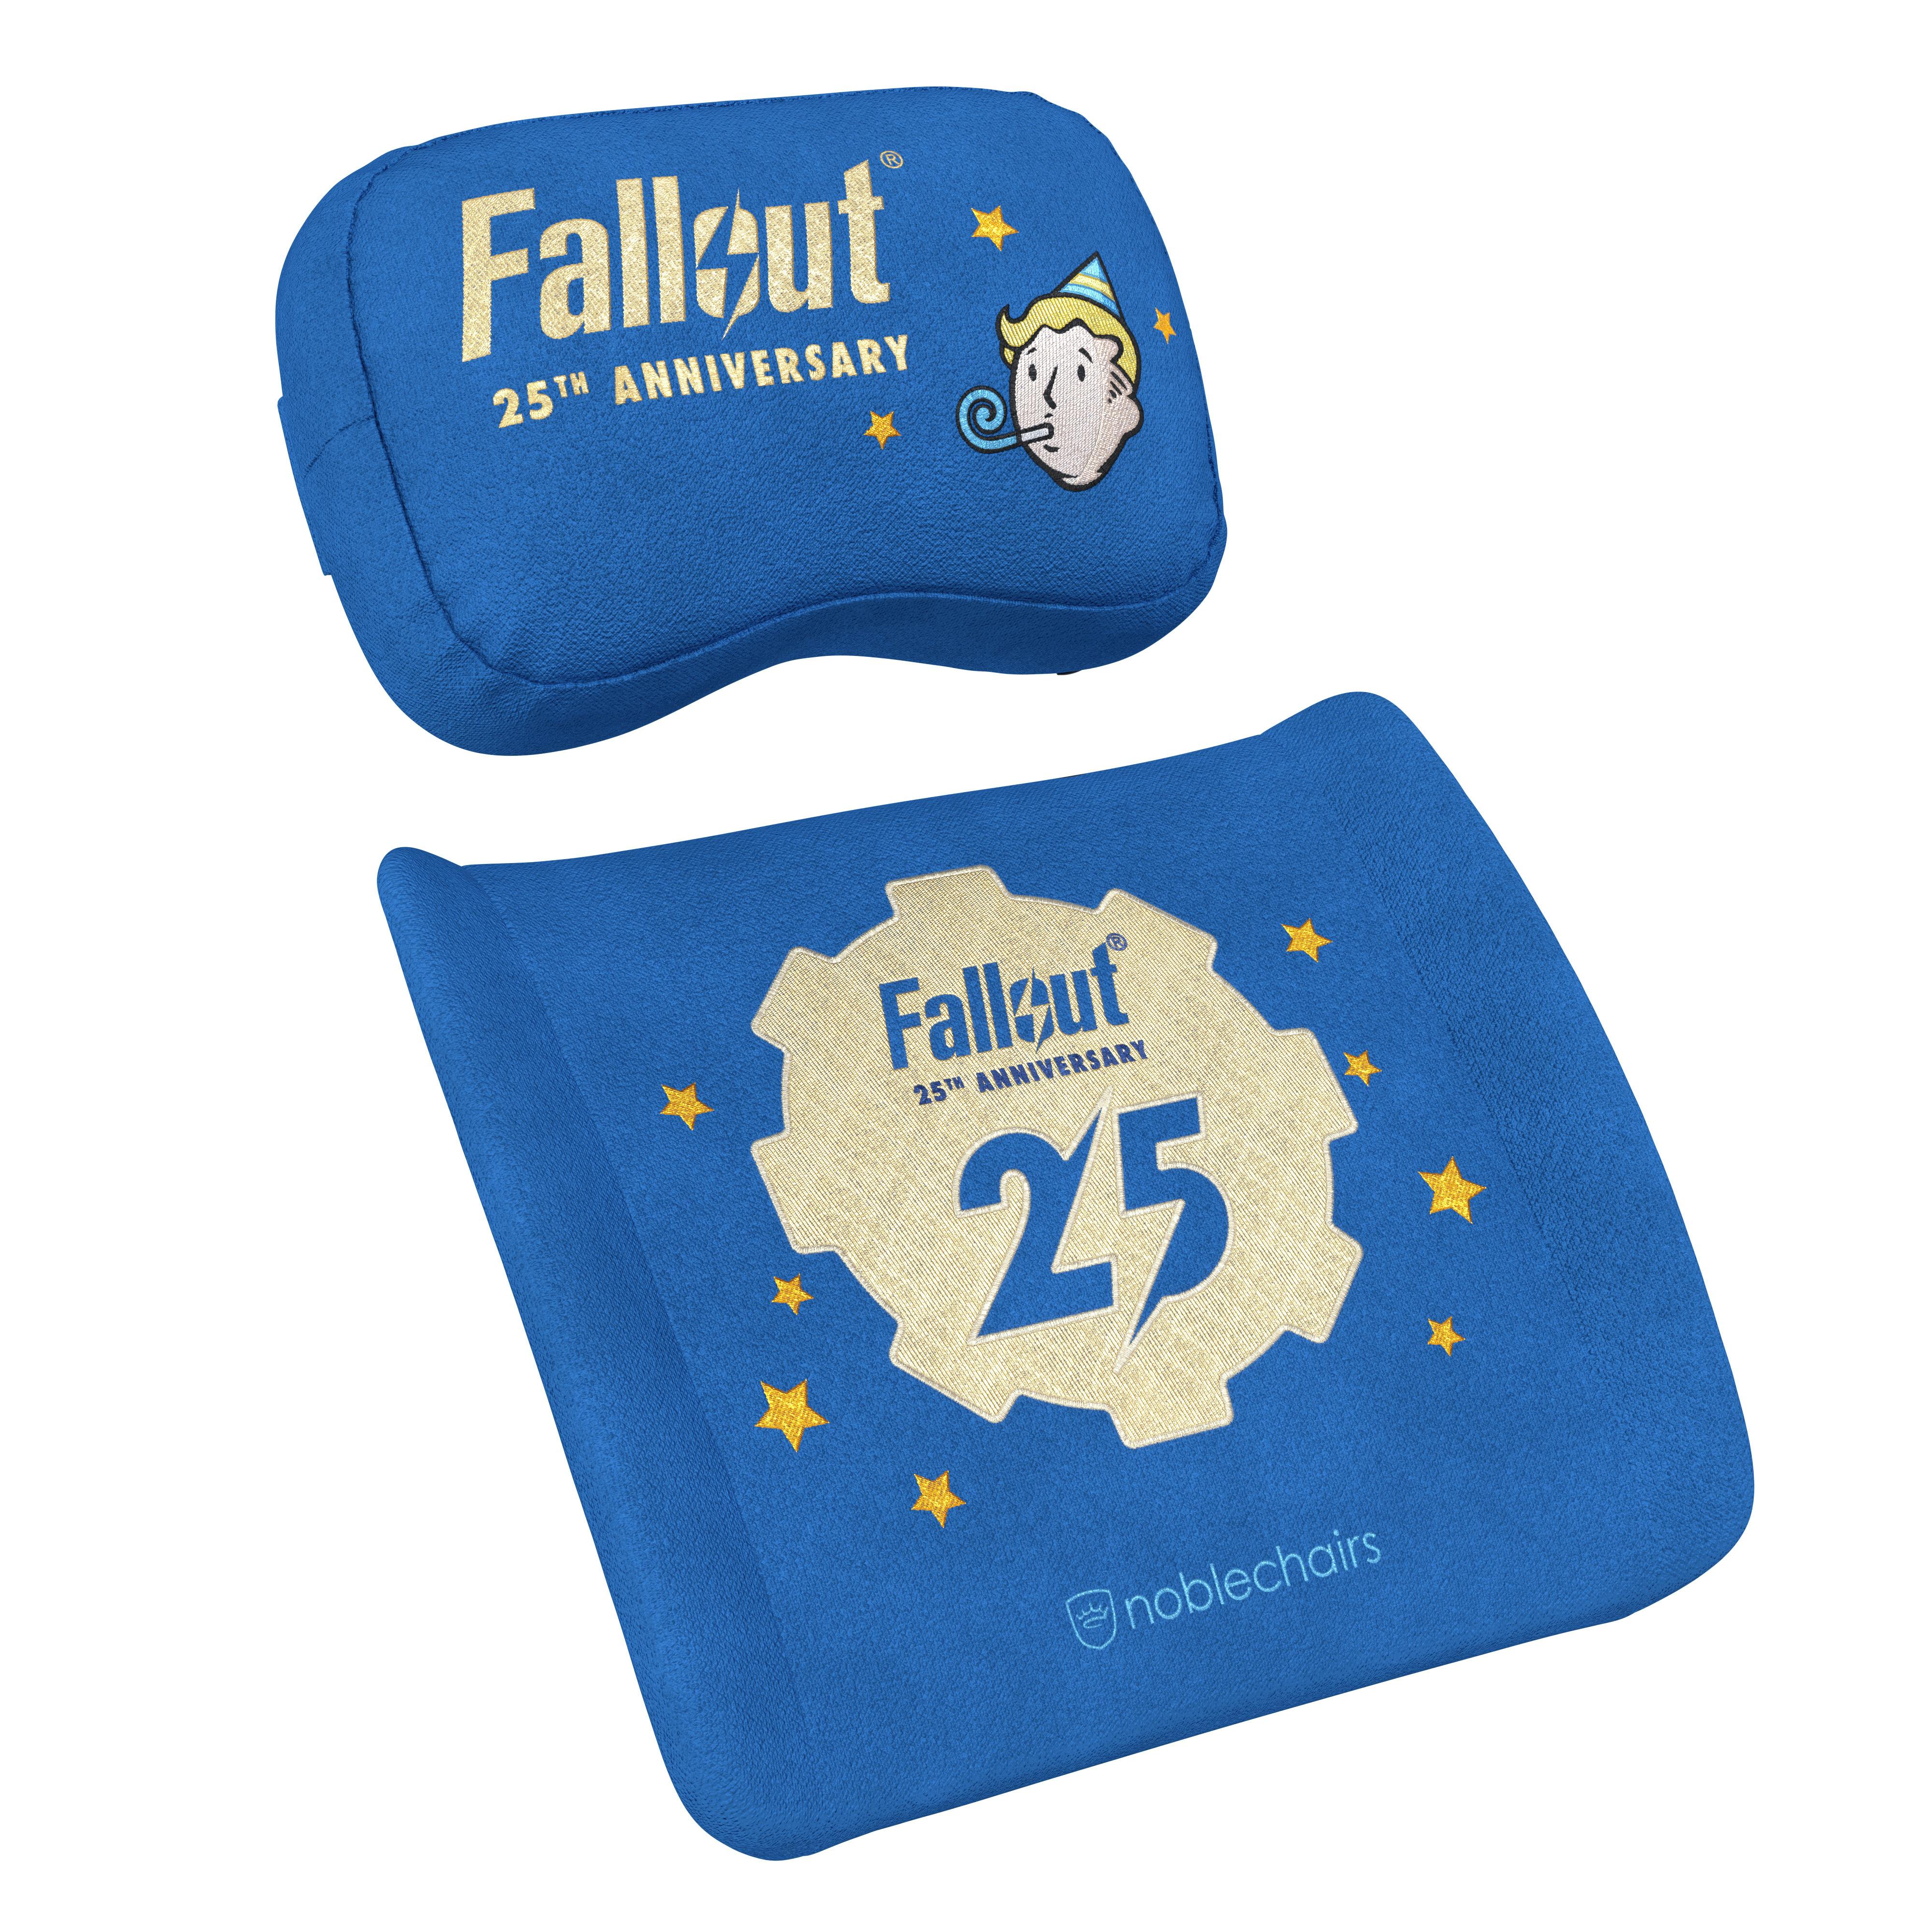 noblechairs - Cojín de espuma de memoria Set de almohadas de la edición del 25º aniversario de Fallout 